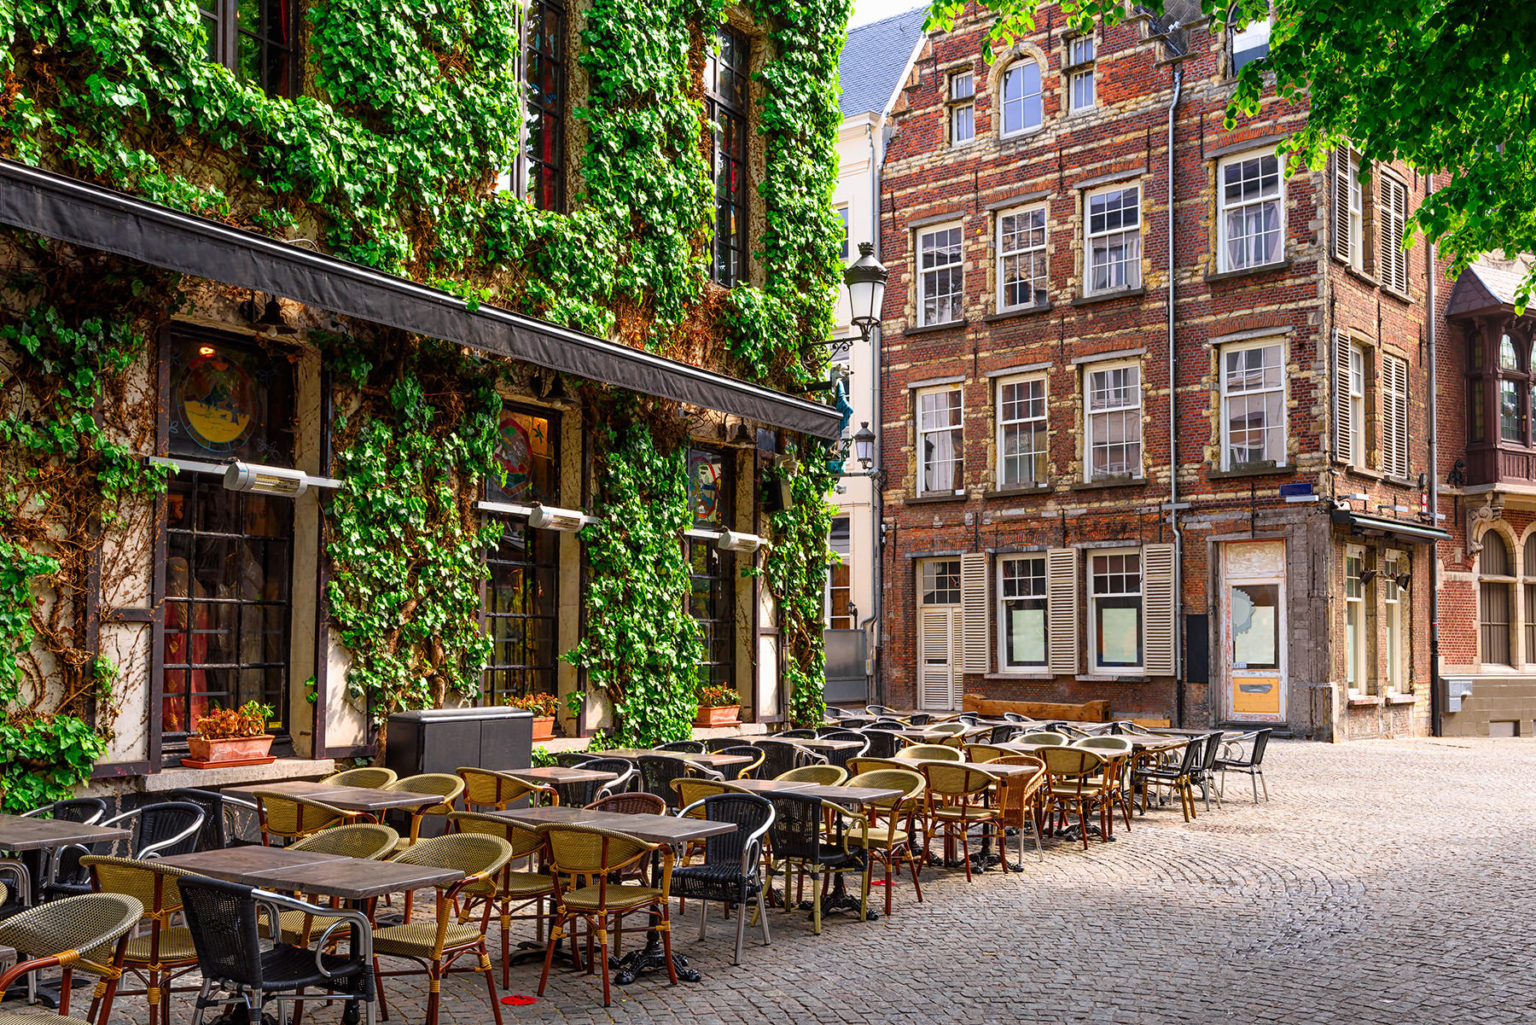 Old street of the historic city center of Antwerpen (Antwerp), B